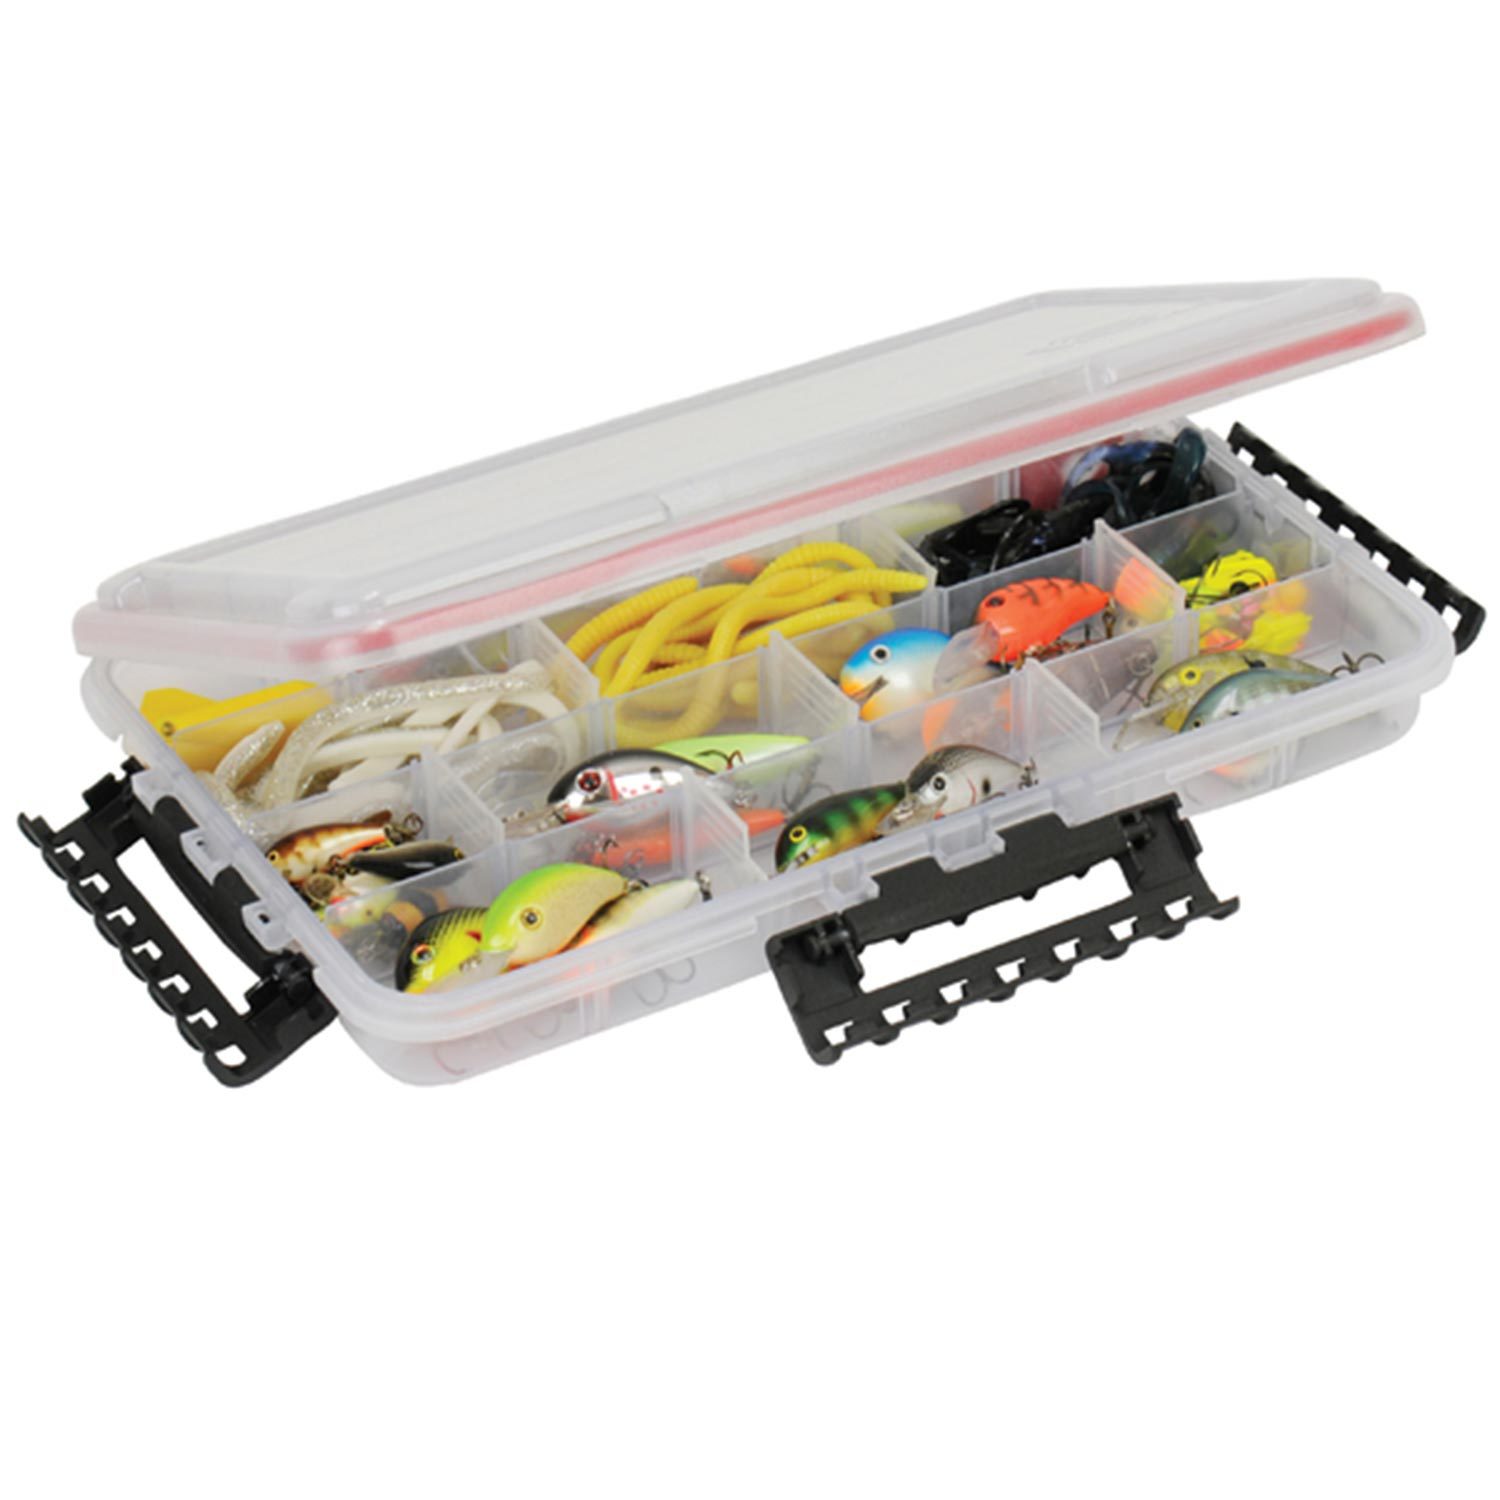 Shop Online Plano Waterproof Tackle Boxes Stowaway for Fishing Gear